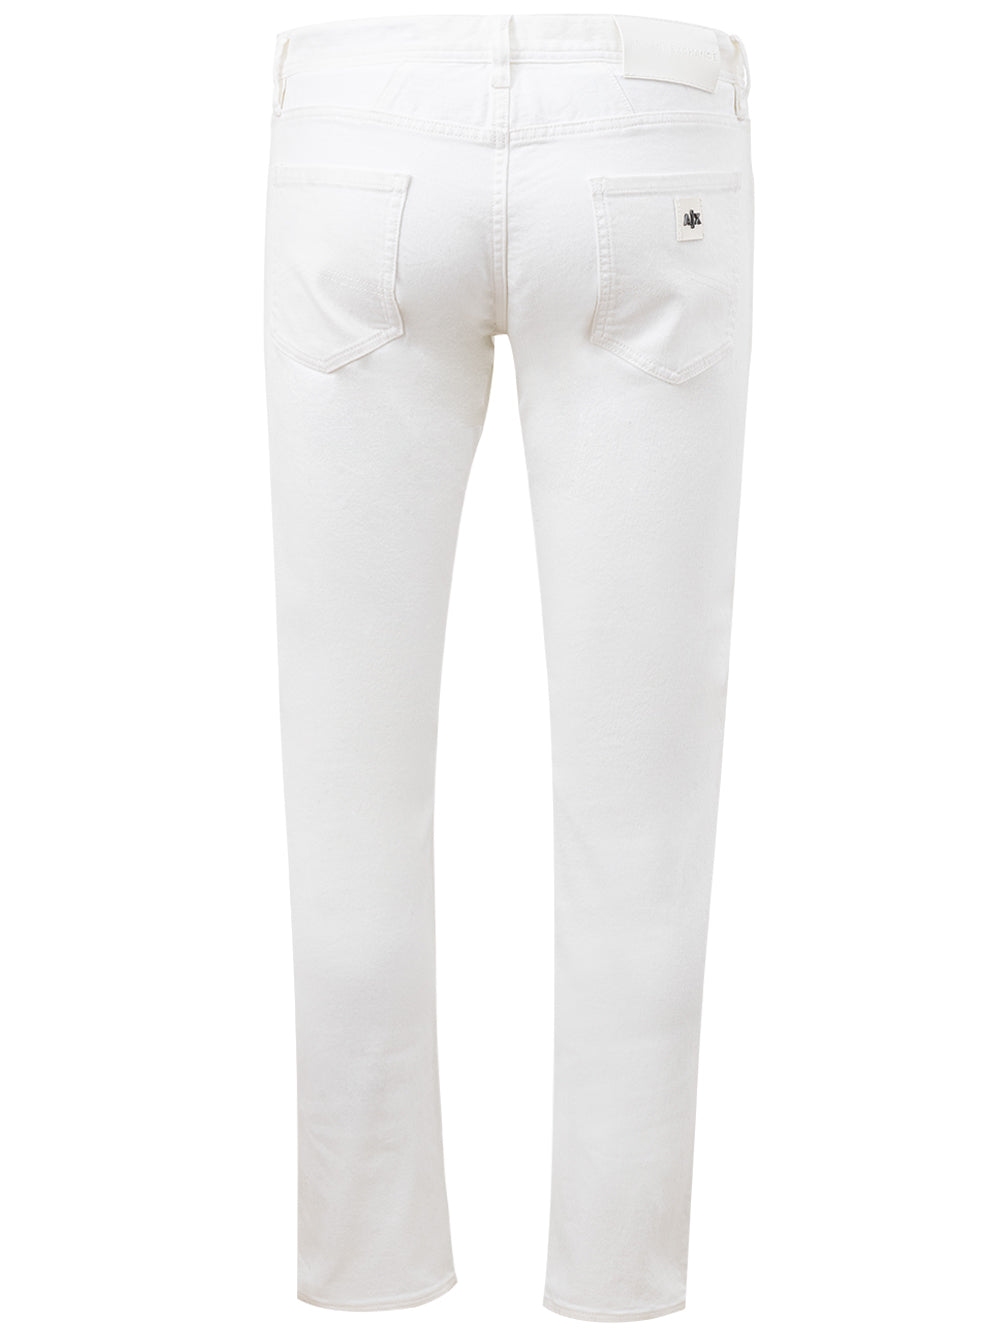 Jeans Bianco Cinque Tasche Armani Exchange